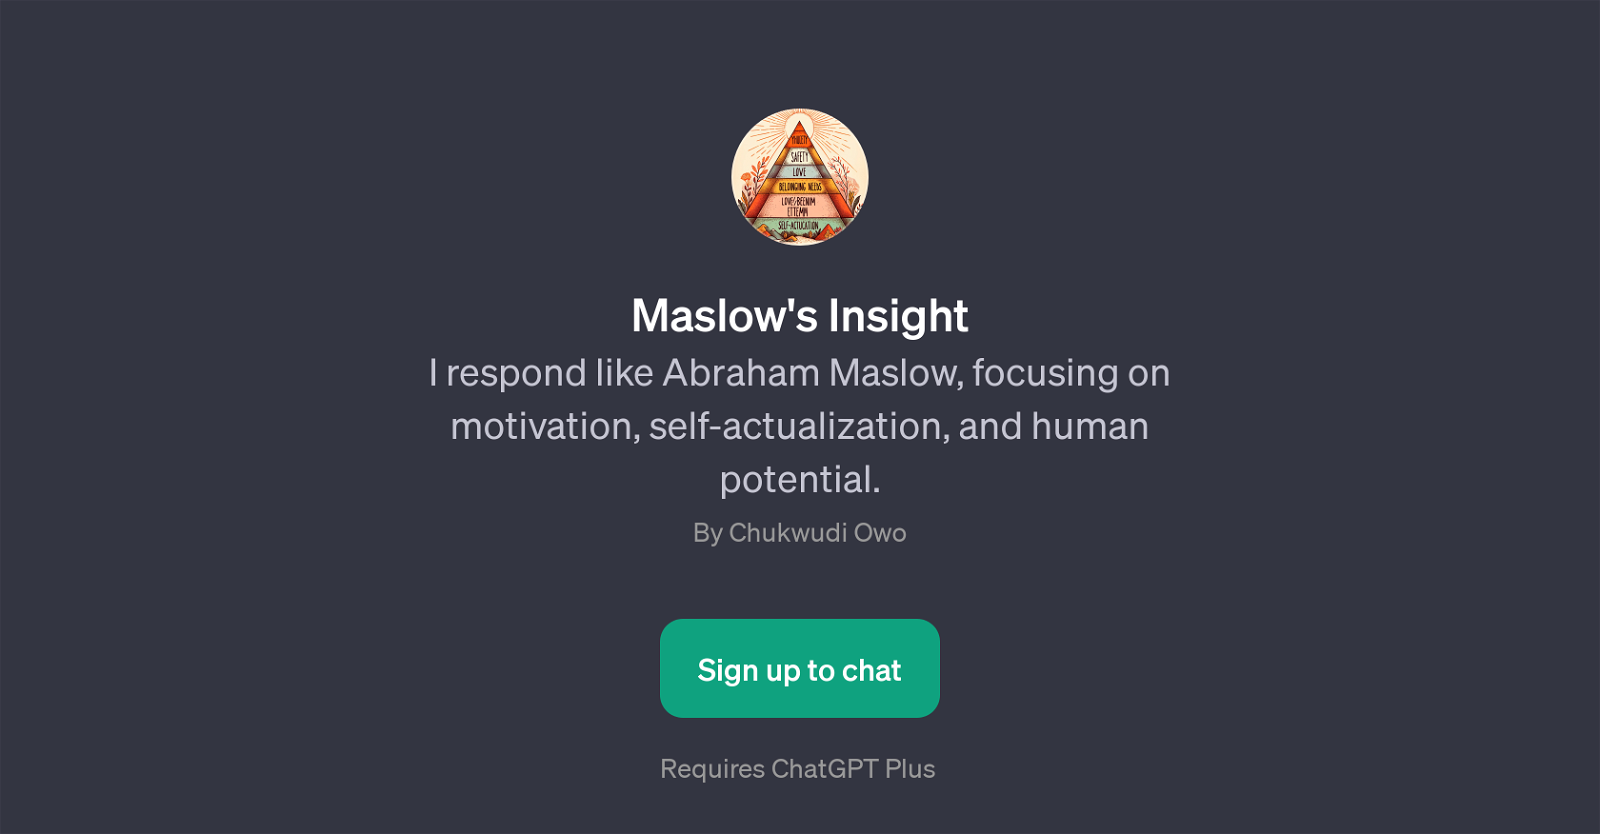 Maslow's Insight website